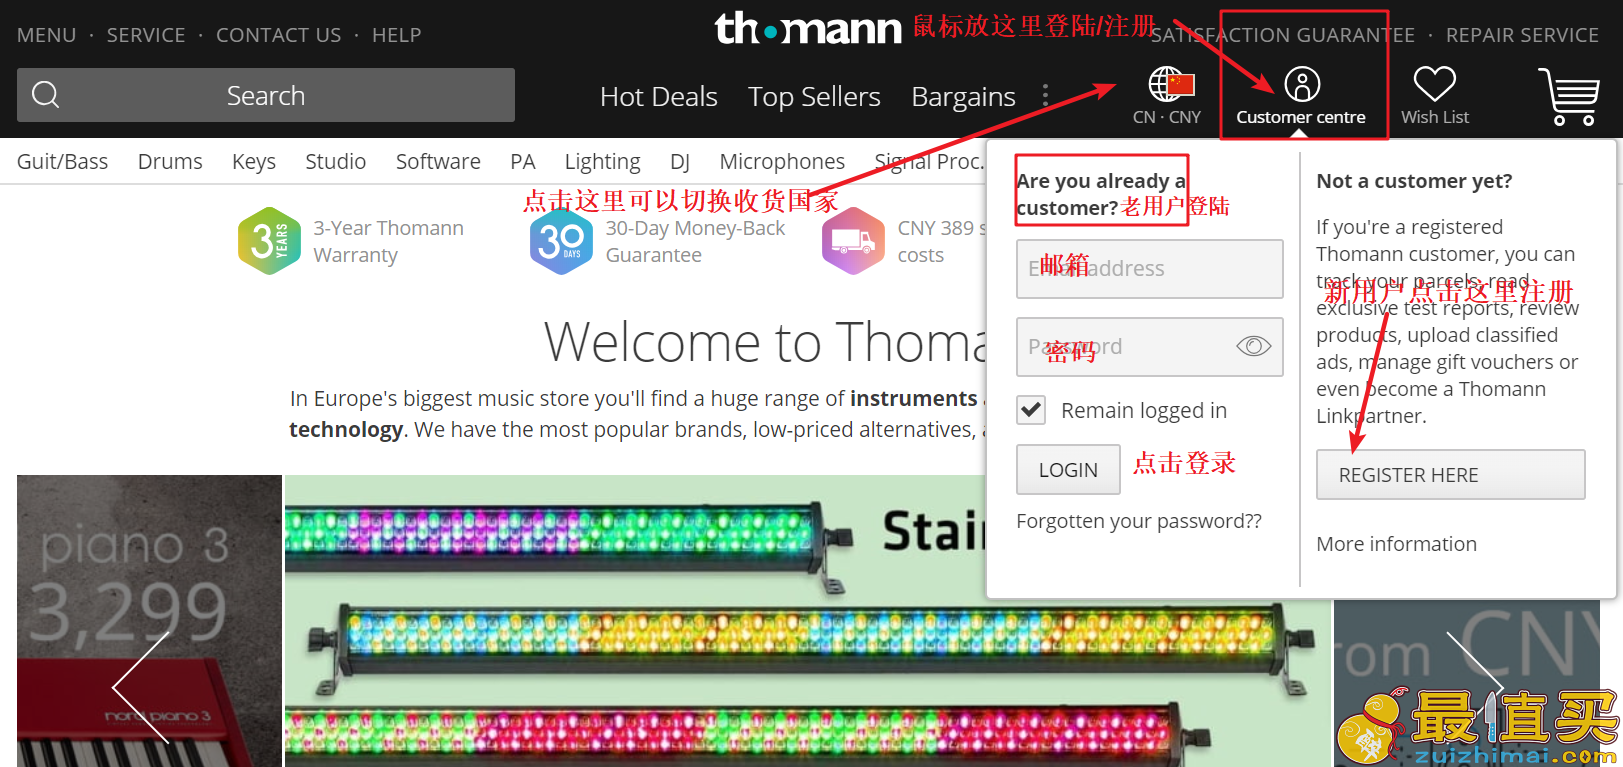 thomann官网-欧洲最大的乐器电商thomann 支持直邮中国 海淘真力音箱 吉他 琴